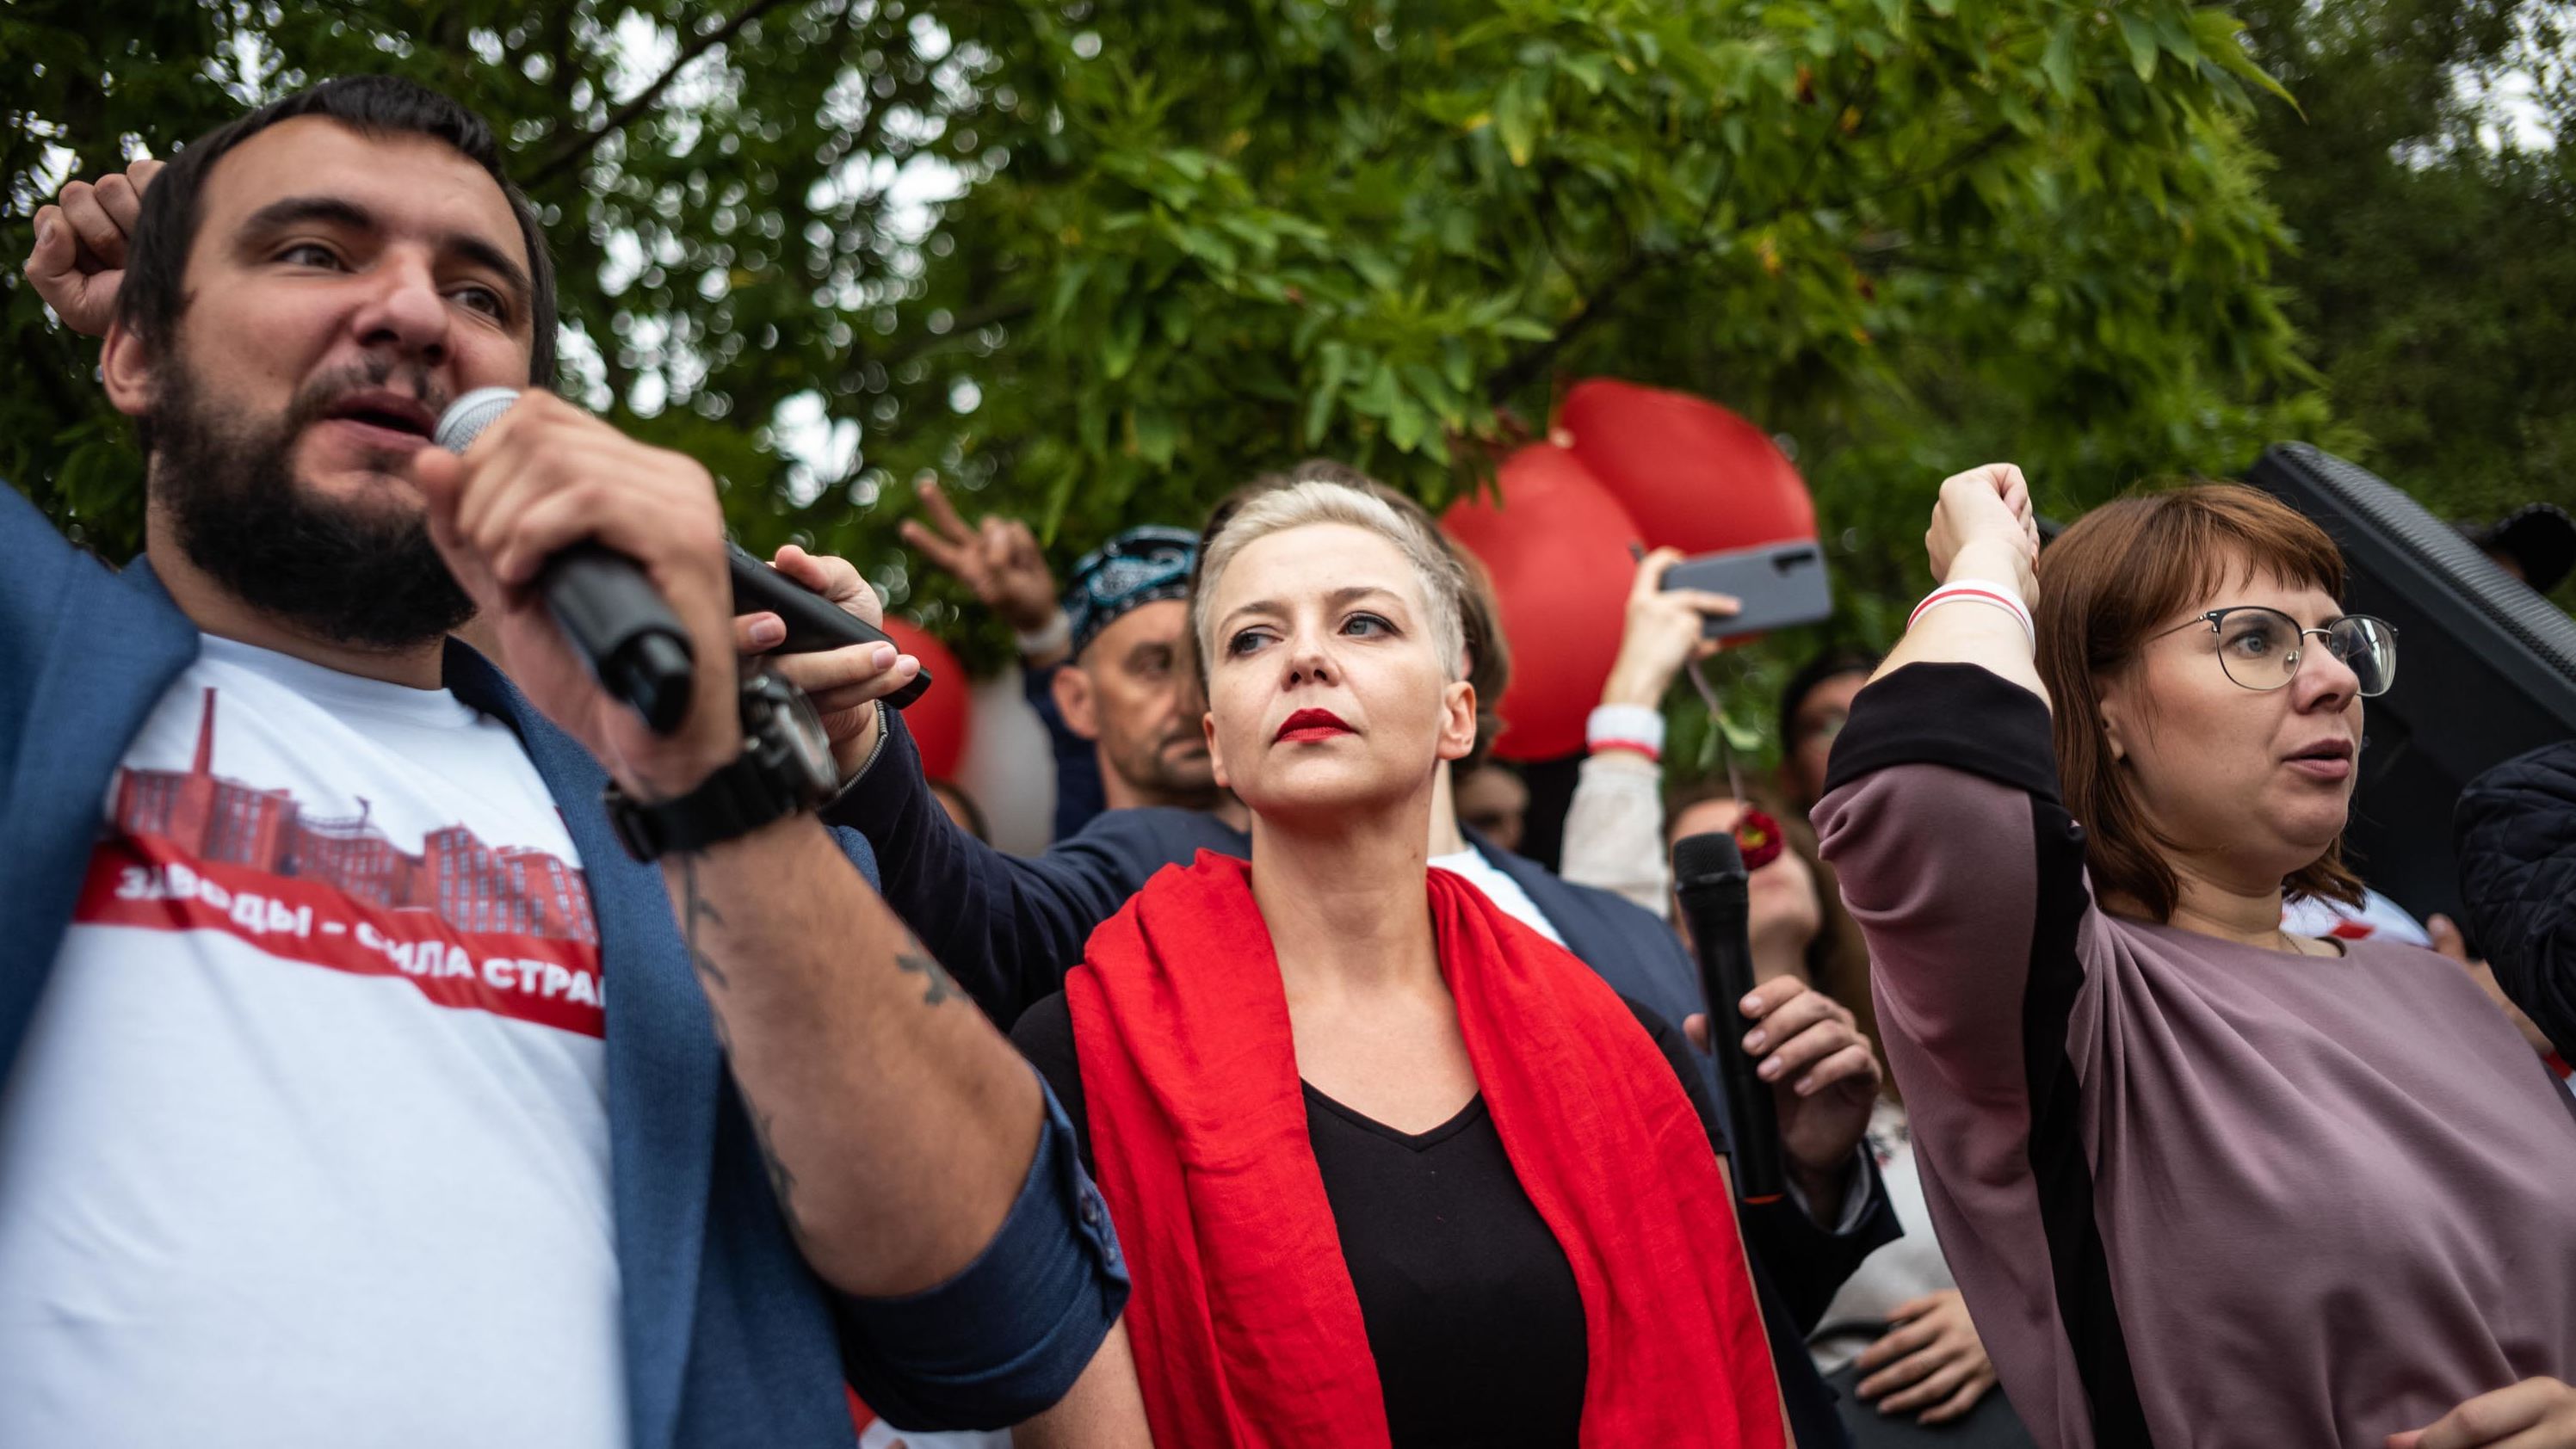 Opposition figure Maria Kolesnikova at an anti-government demonstration on August 23, 2020 in Minsk, Belarus